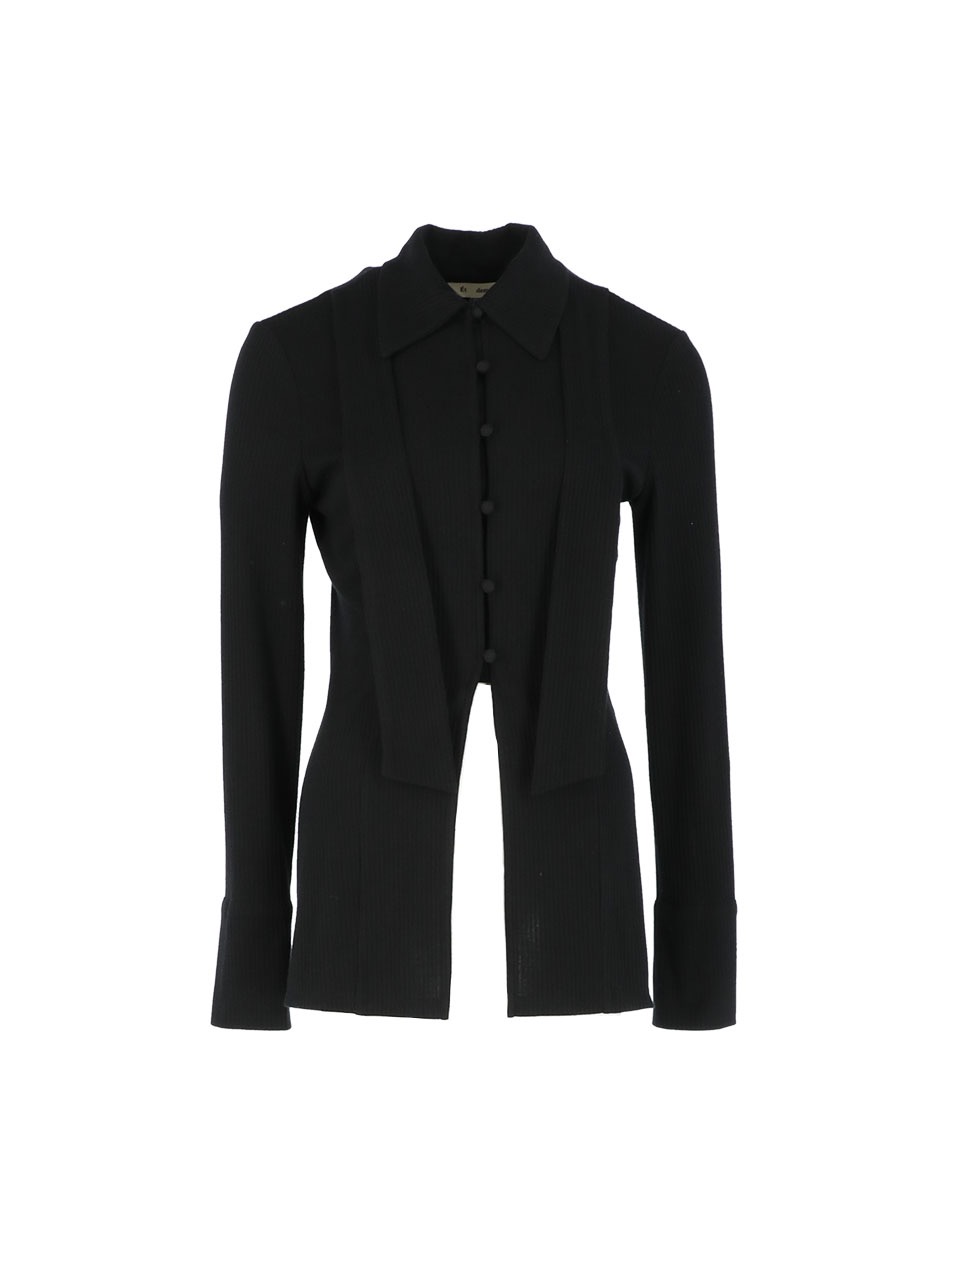 Scarf tie-neck jersey blouse top (Black)